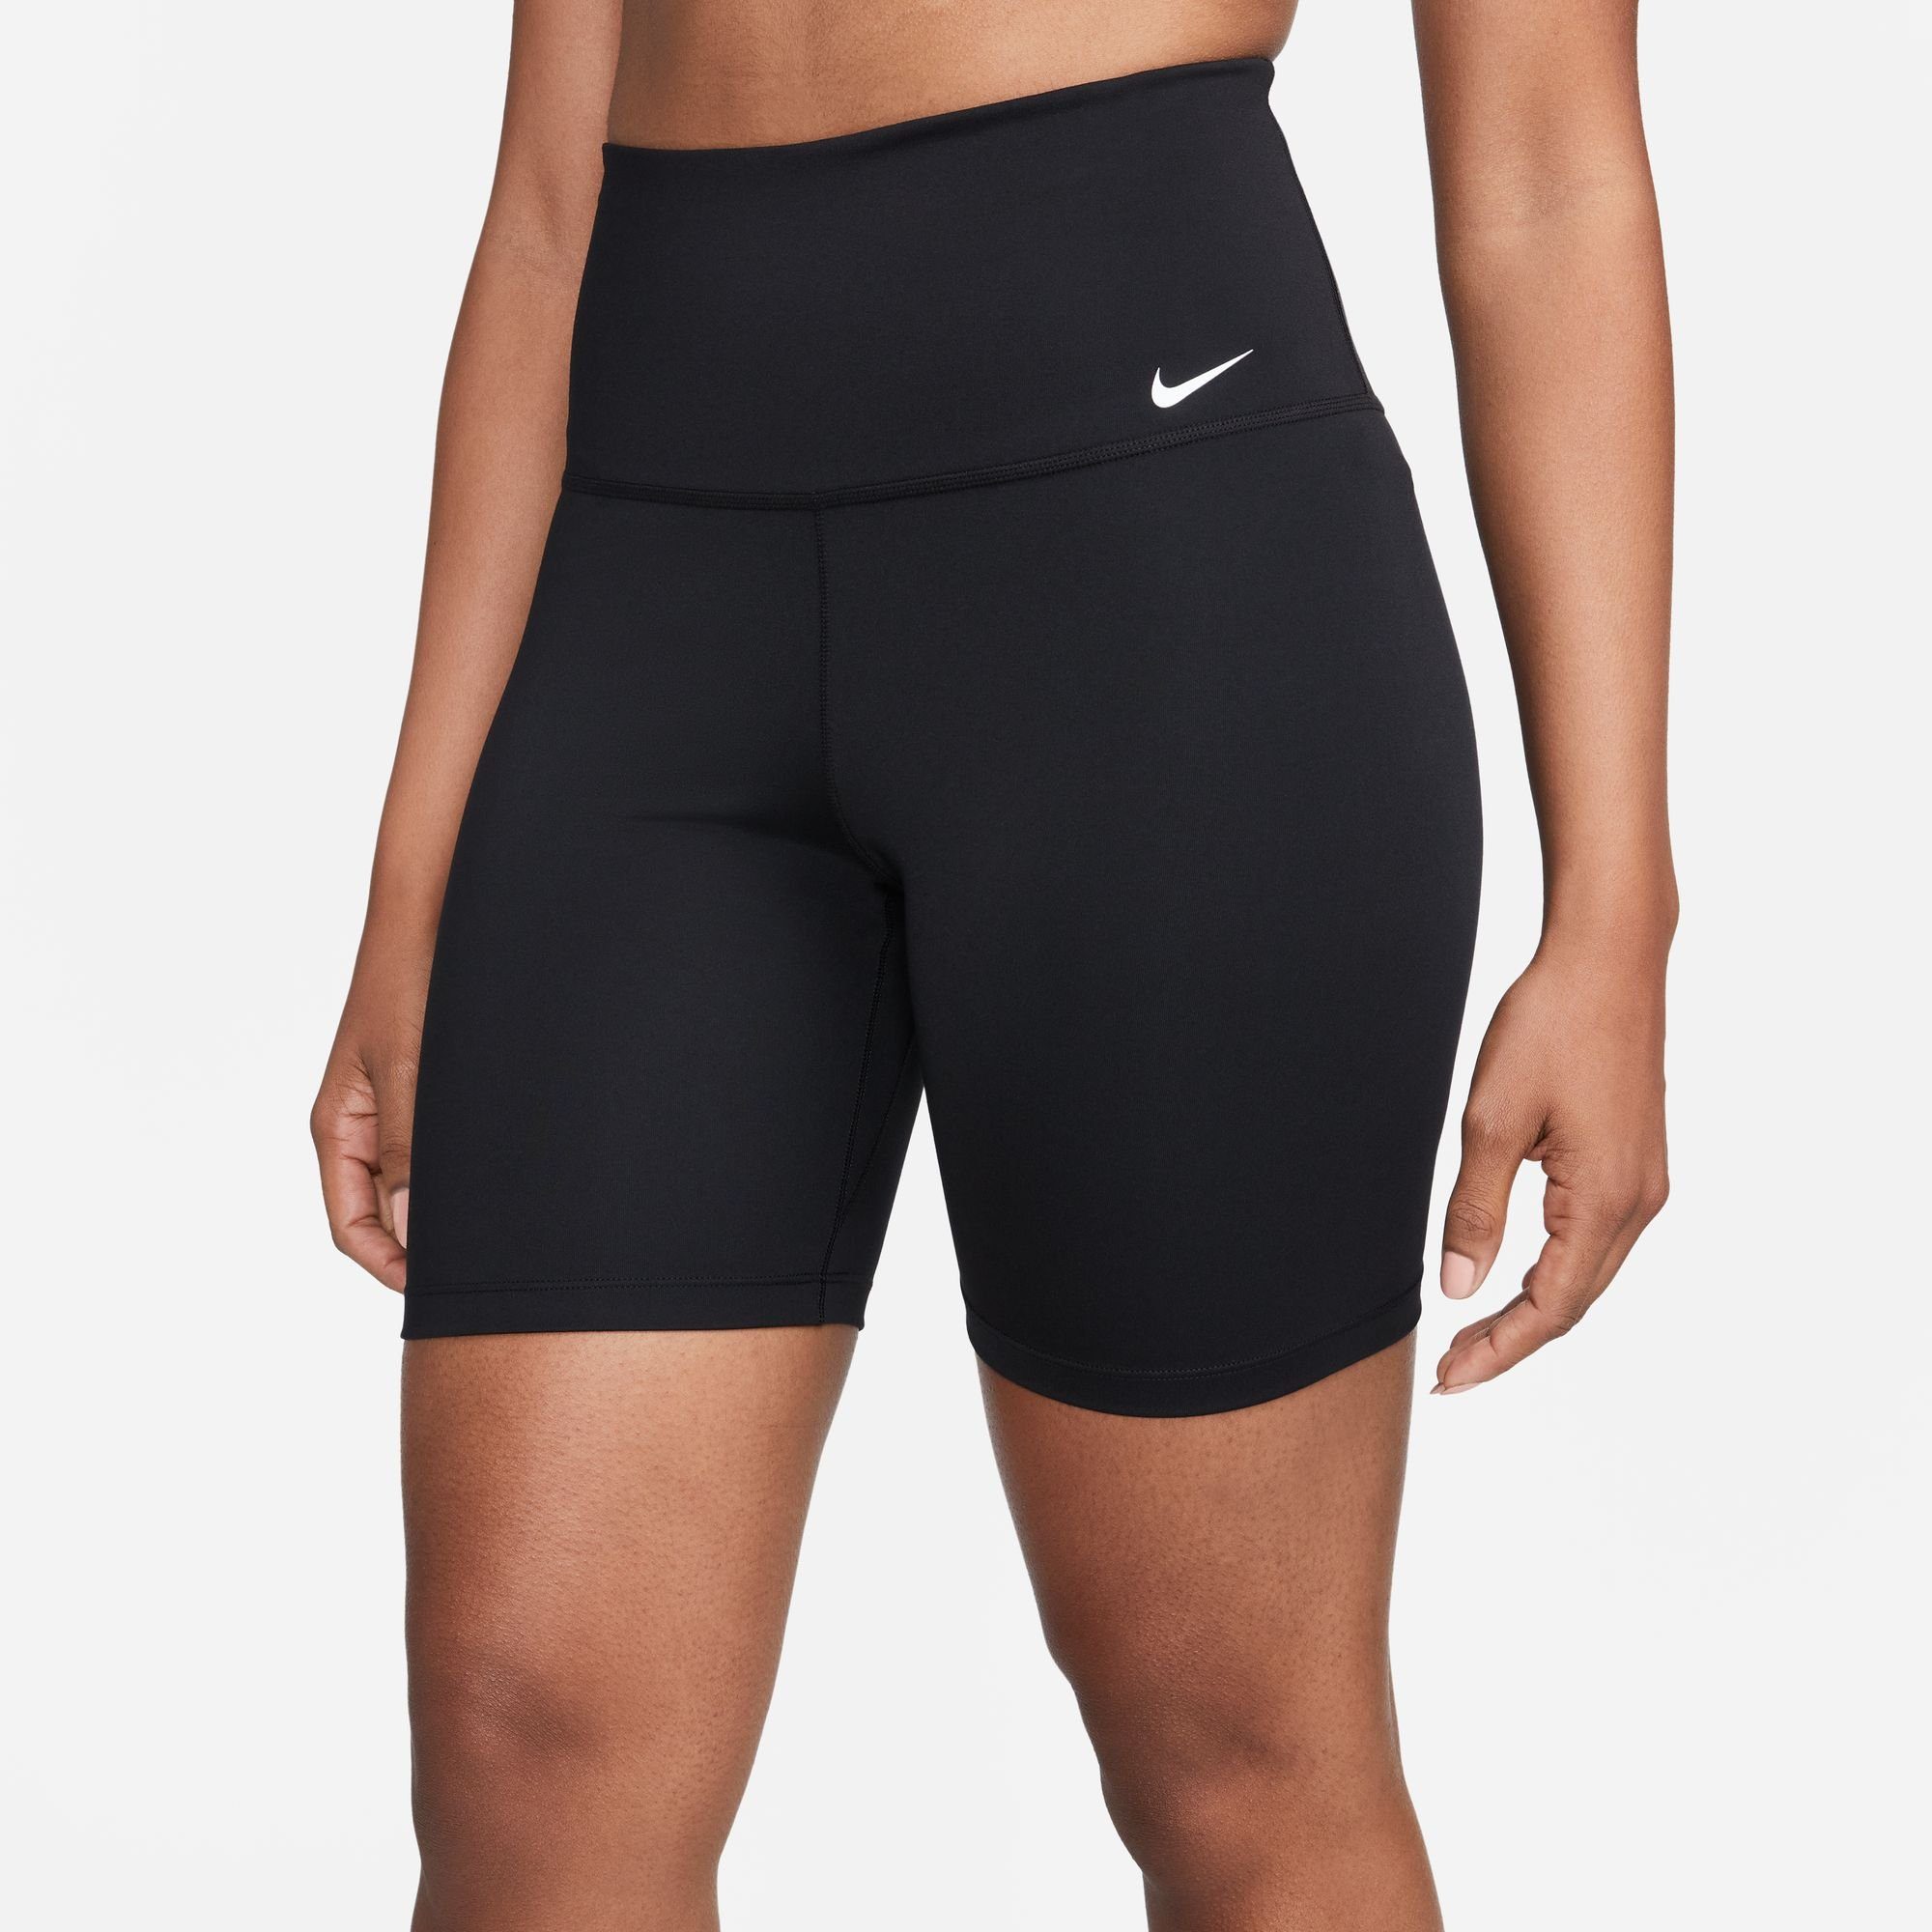 Nike Trainingstights DRI-FIT ONE WOMEN'S HIGH-WAISTED schwarz SHORTS BIKER